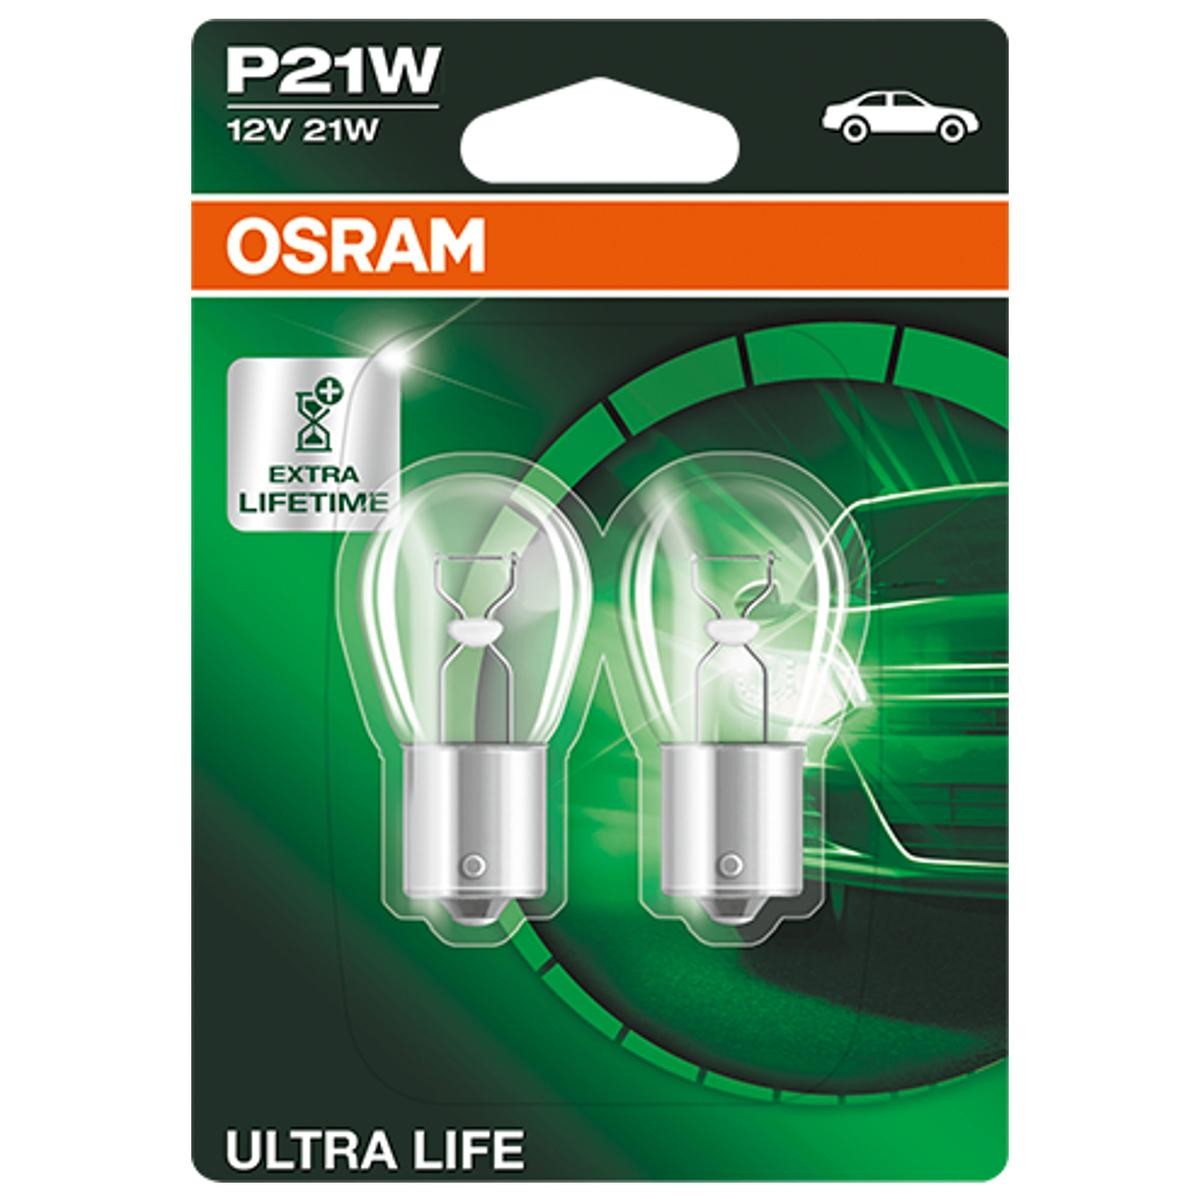 P21W OSRAM ULTRA LIFE 12V 21W, P21W Bulb, indicator 7506ULT-02B buy